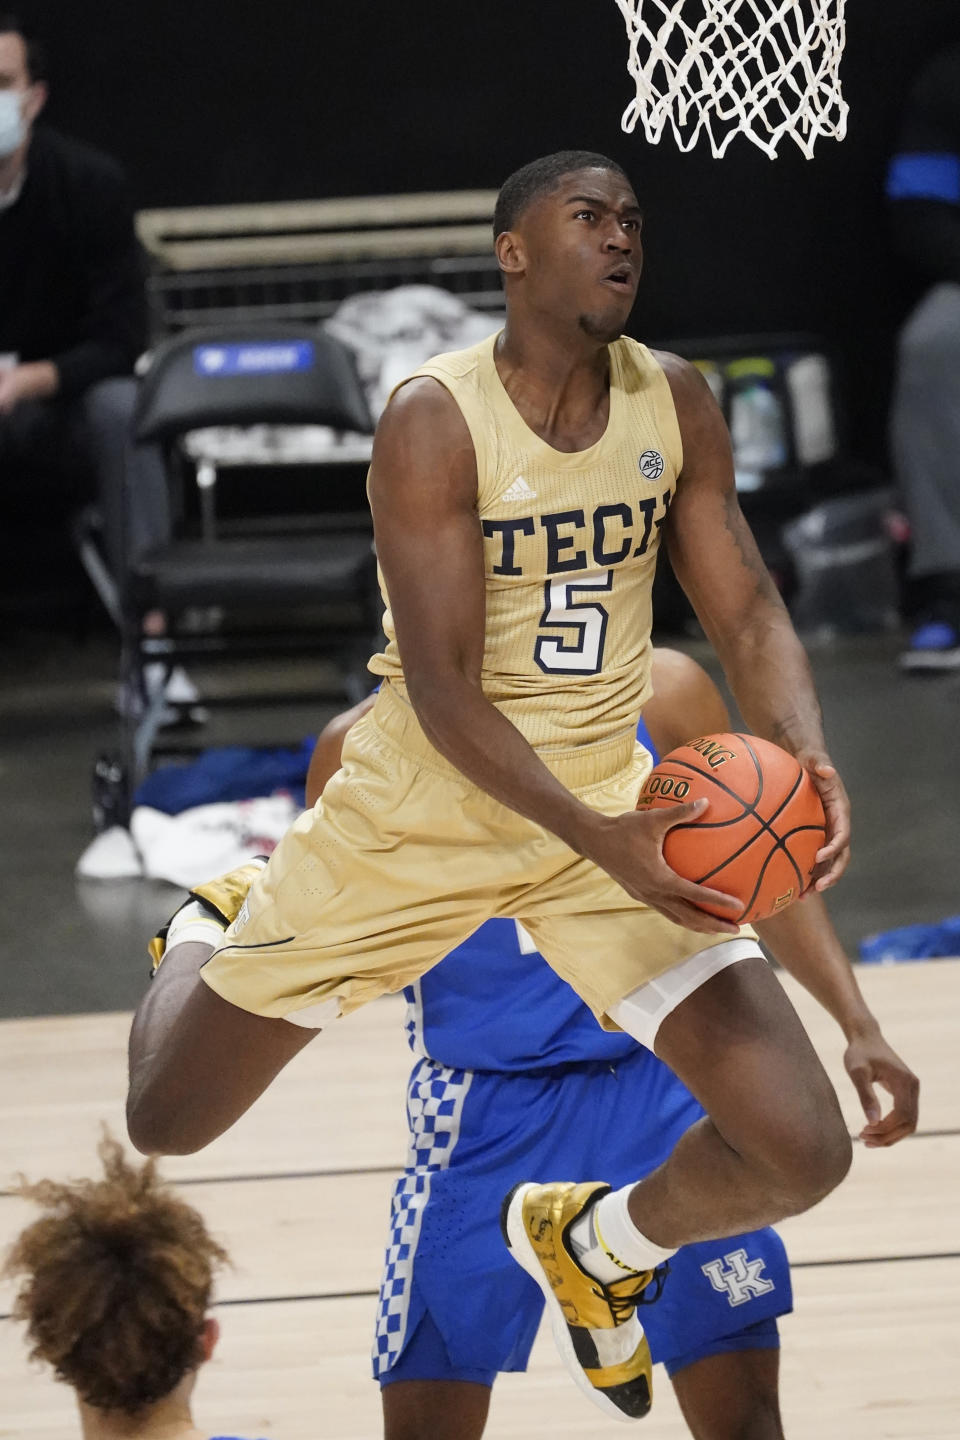 Georgia Tech forward Moses Wright (5) scores against Kentucky during the first half of an NCAA college basketball game Sunday, Dec. 6, 2020, in Atlanta. (AP Photo/John Bazemore)